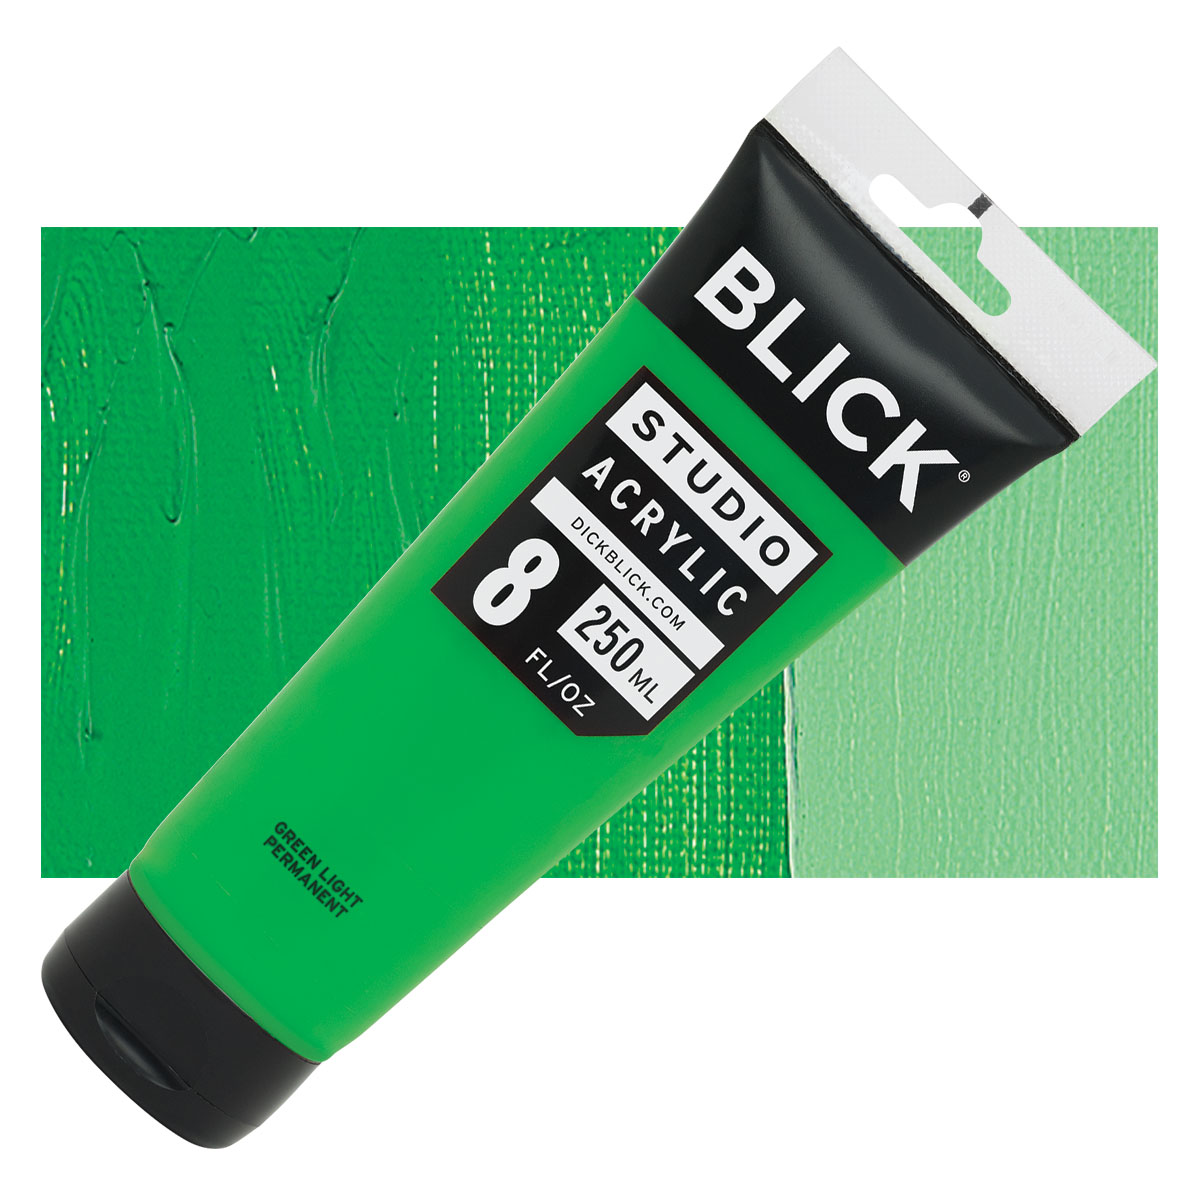 Blick Studio Acrylics - Titanium White, 16 oz jar